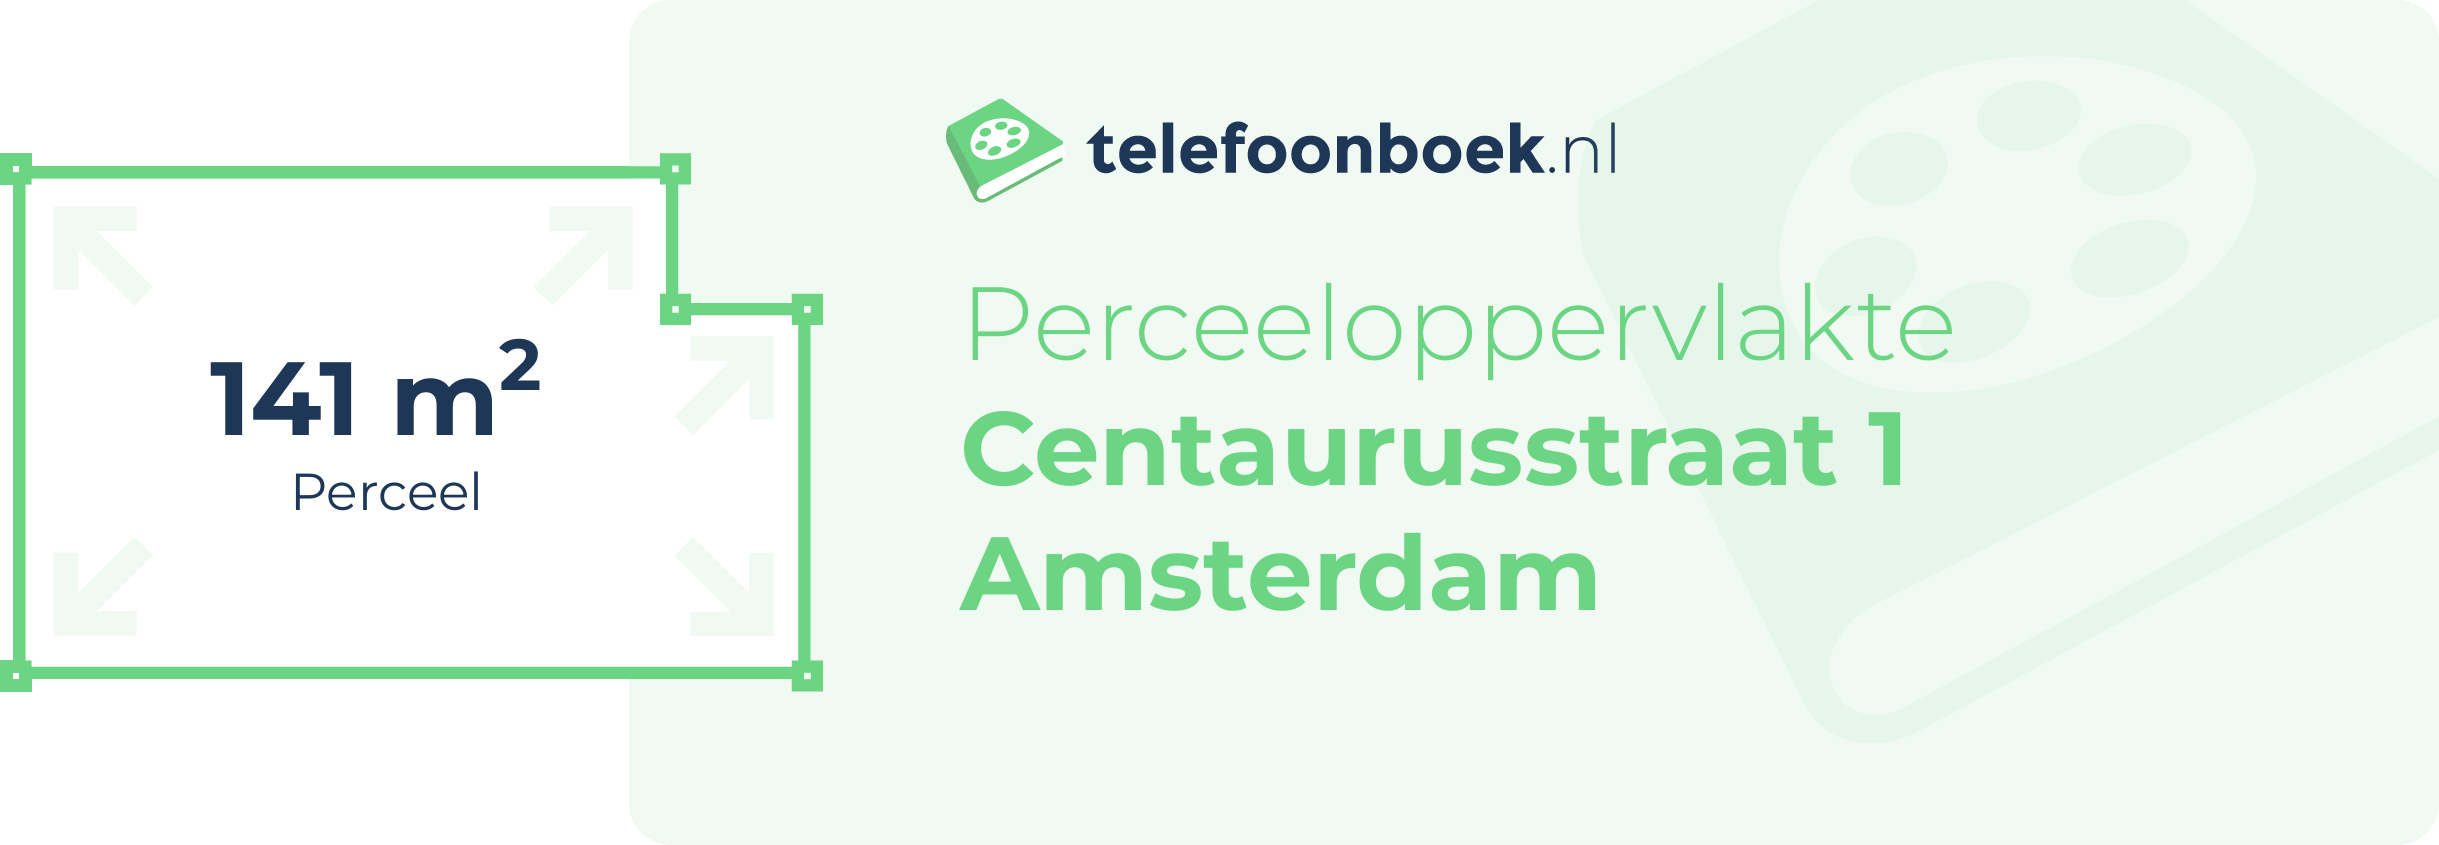 Perceeloppervlakte Centaurusstraat 1 Amsterdam